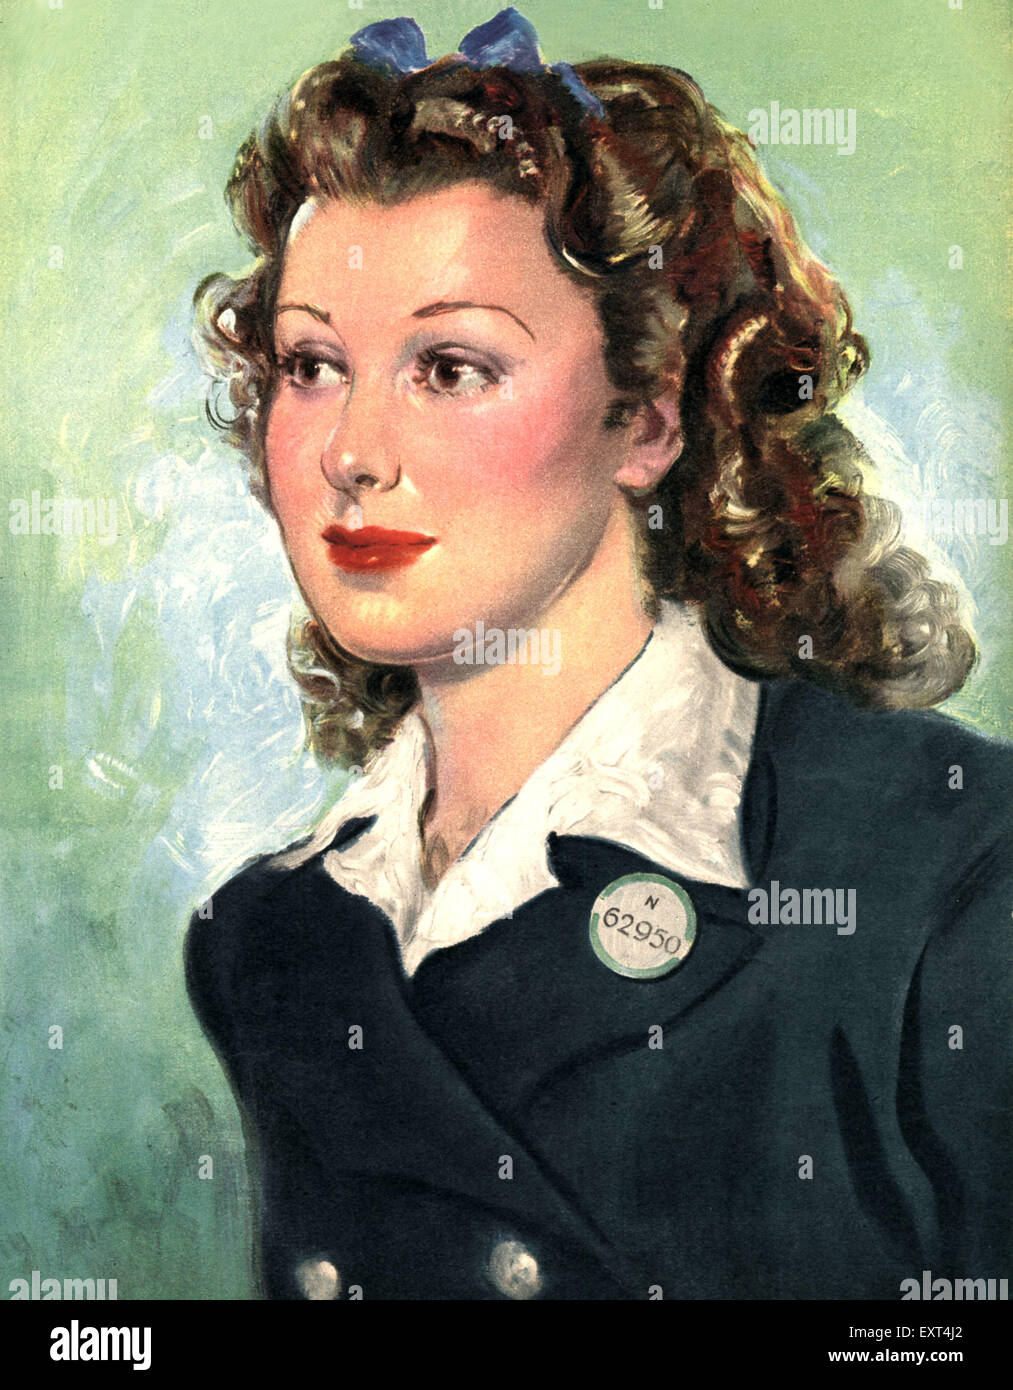 1940s UK Portrait Magazine Cover Stock Photo